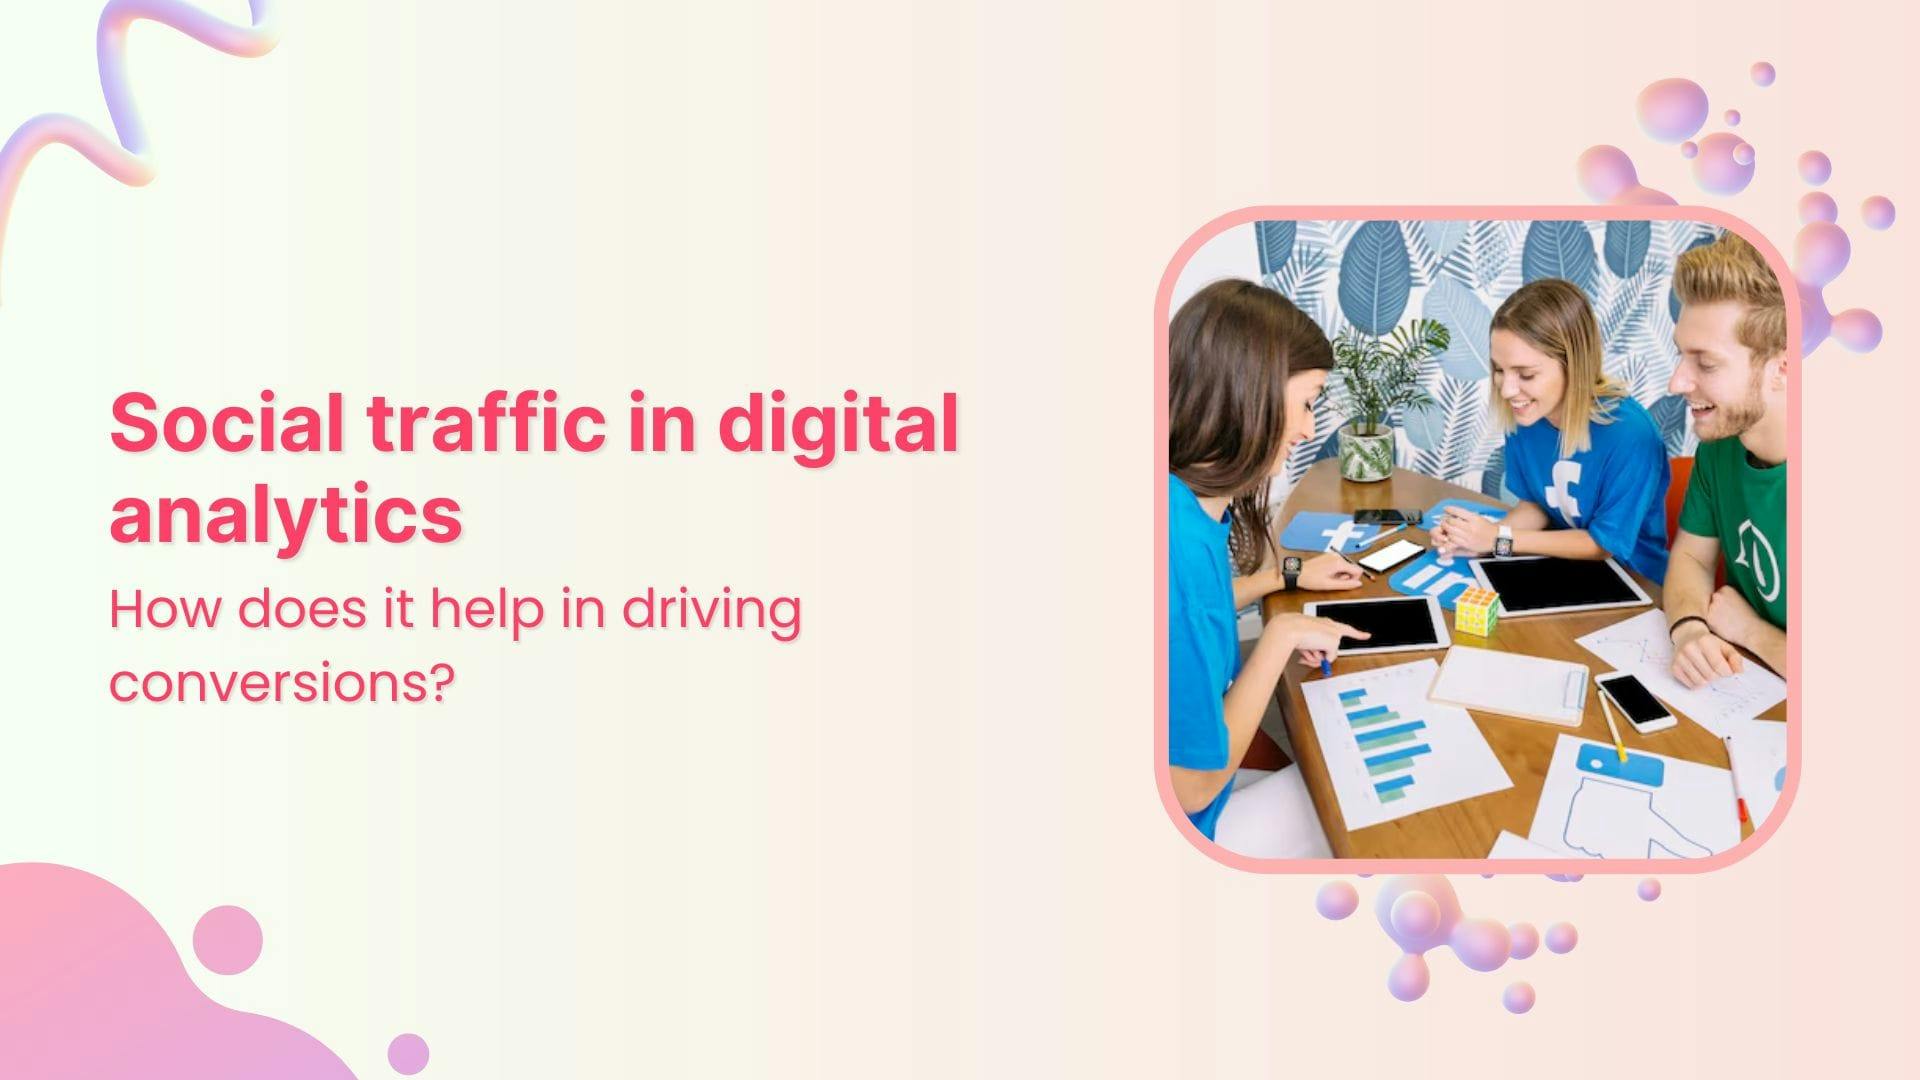 What is social traffic in digital analytics?